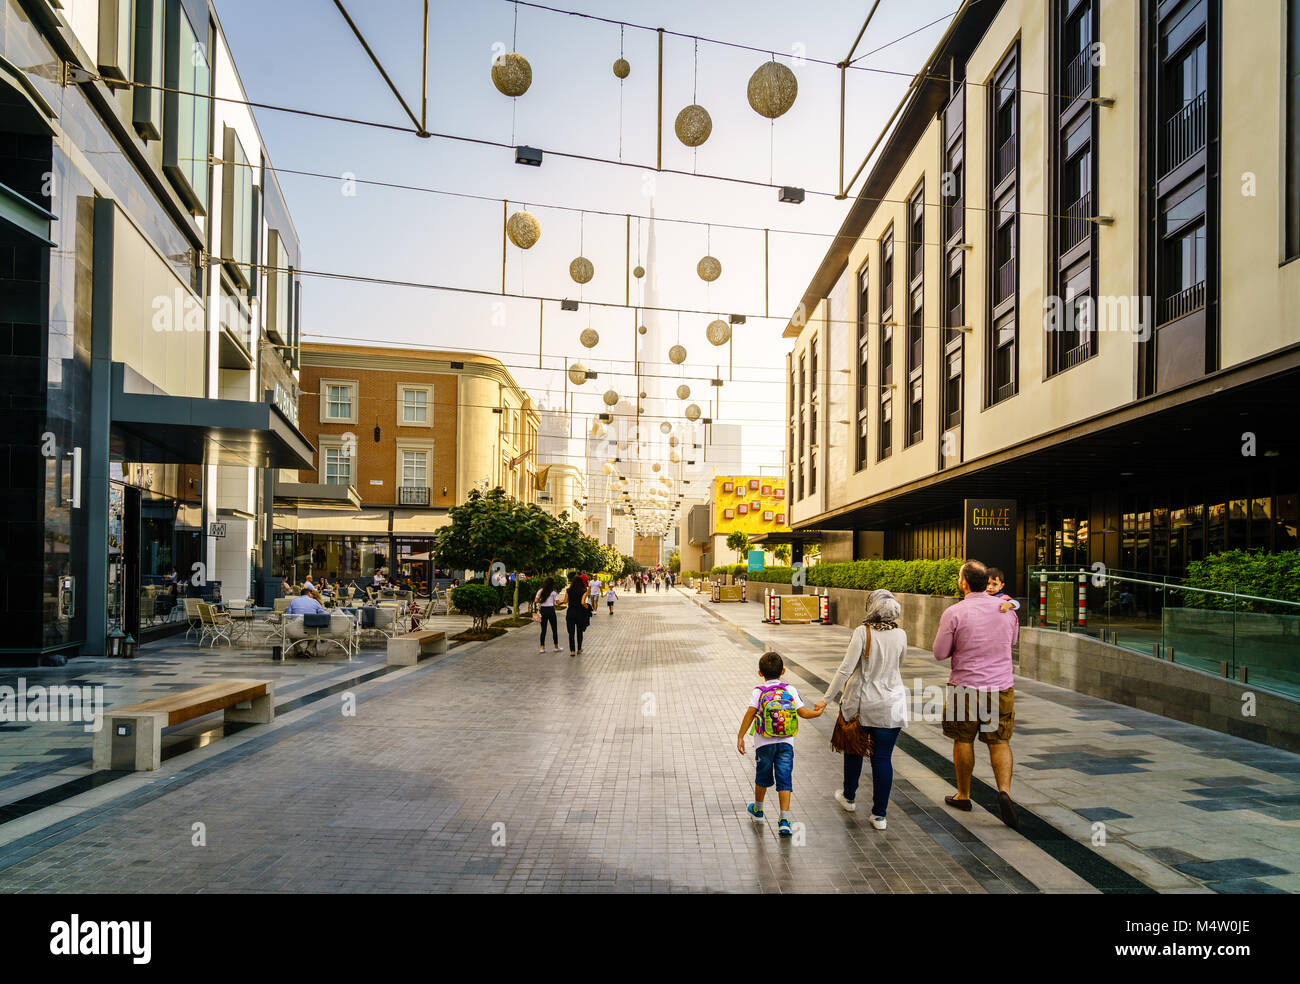 Dubai, UAE, December 23, 2016: Shopping street in Dubai City Walk district. The area is still under development. Stock Photo